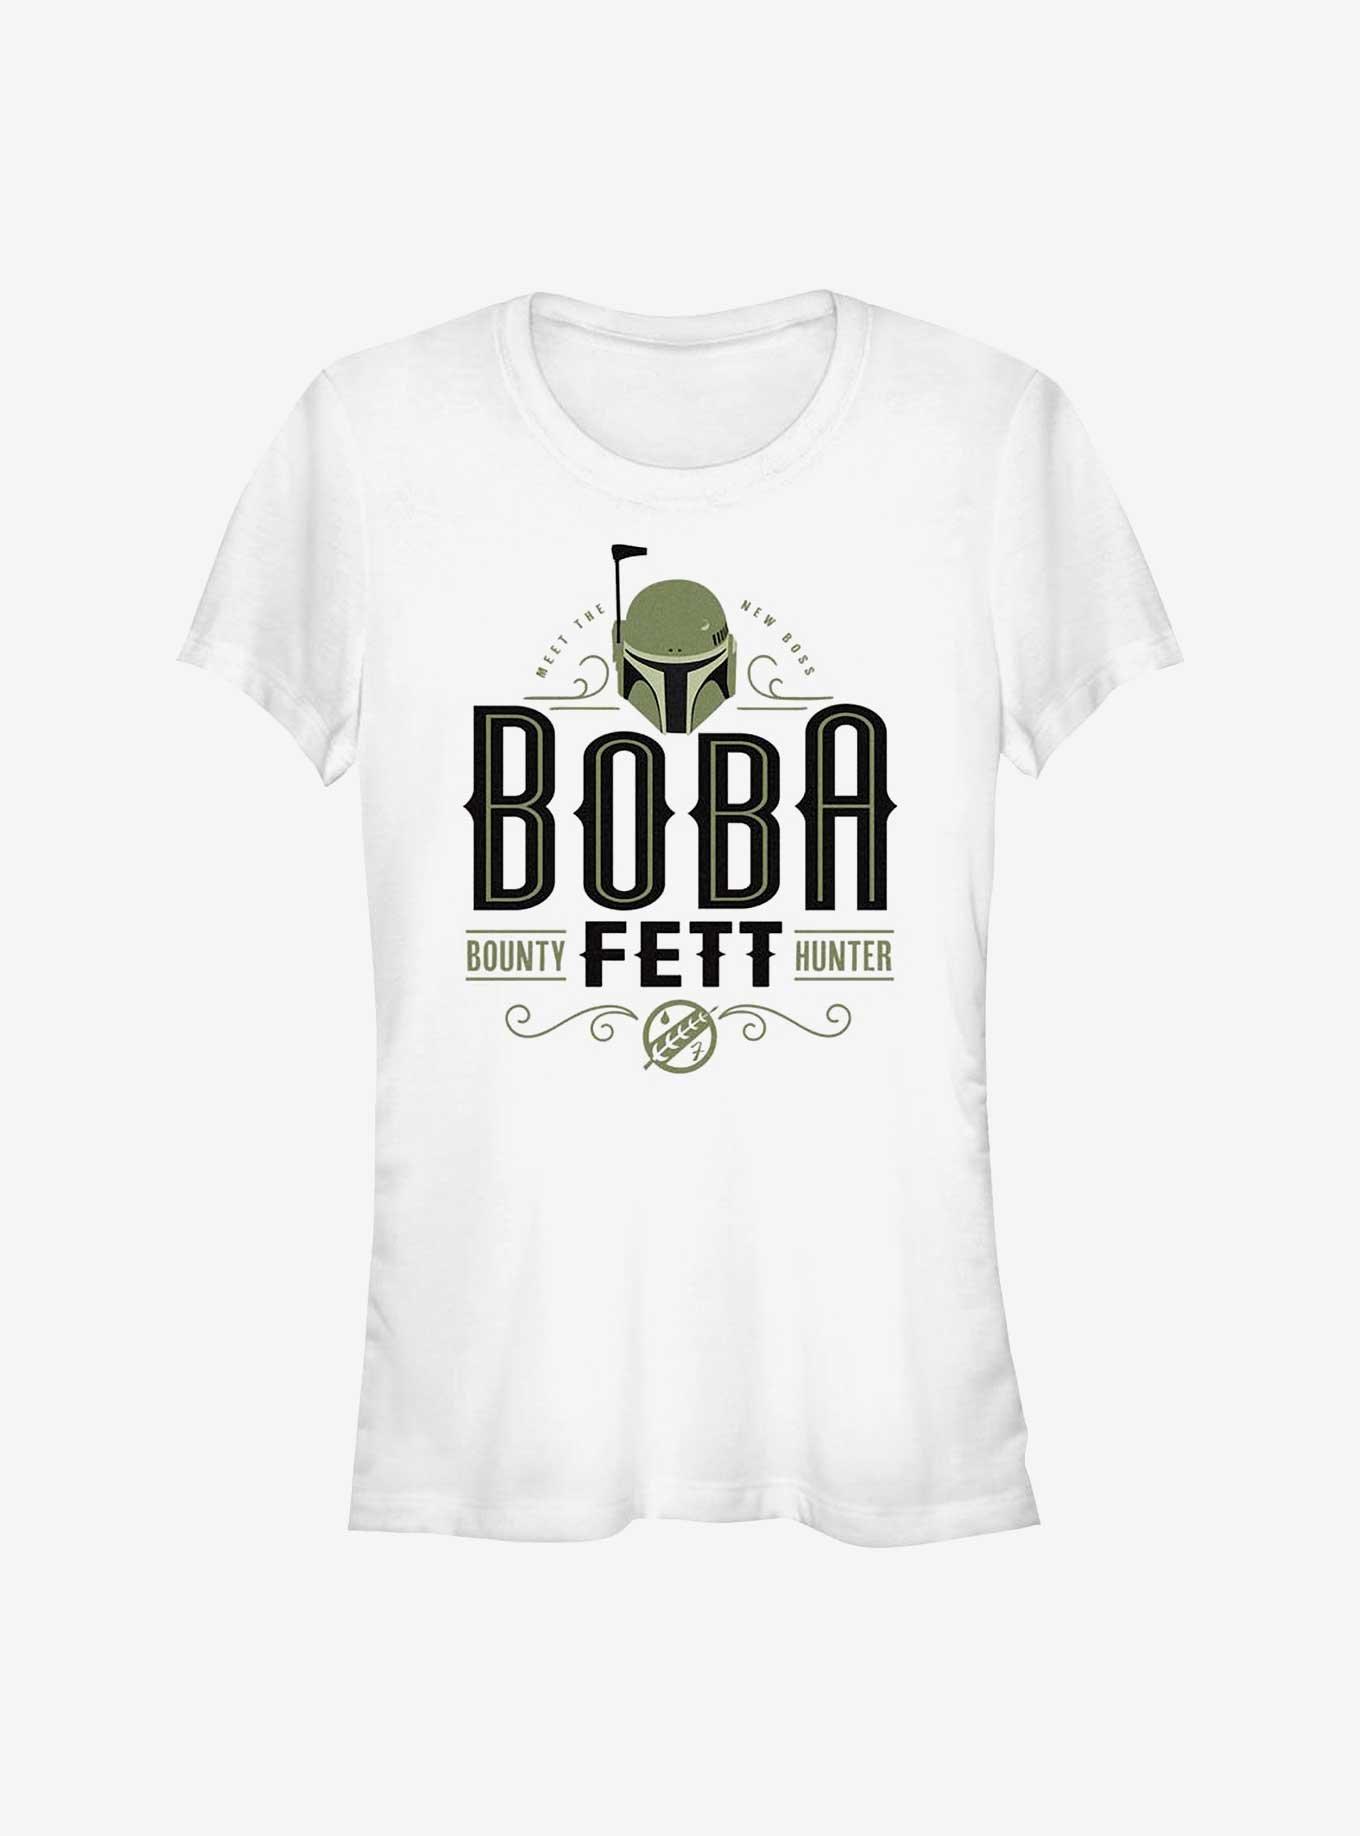 Star Wars The Book Of Boba Fett Bounty Hunter Girls T-Shirt